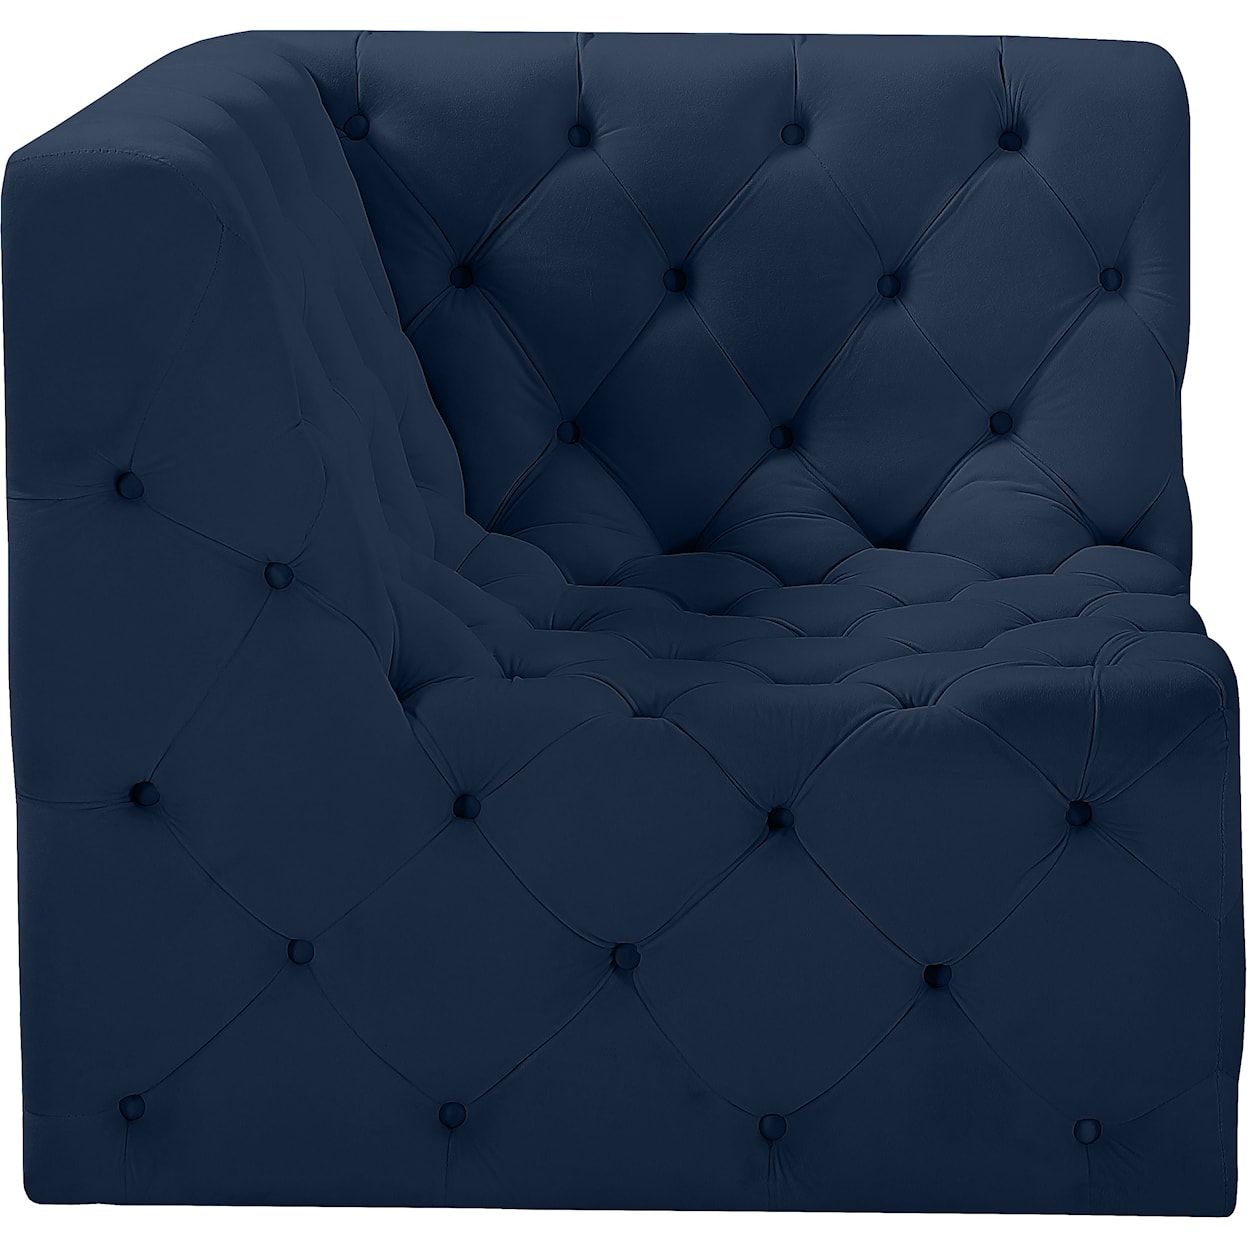 Meridian Furniture Tuft Corner Chair